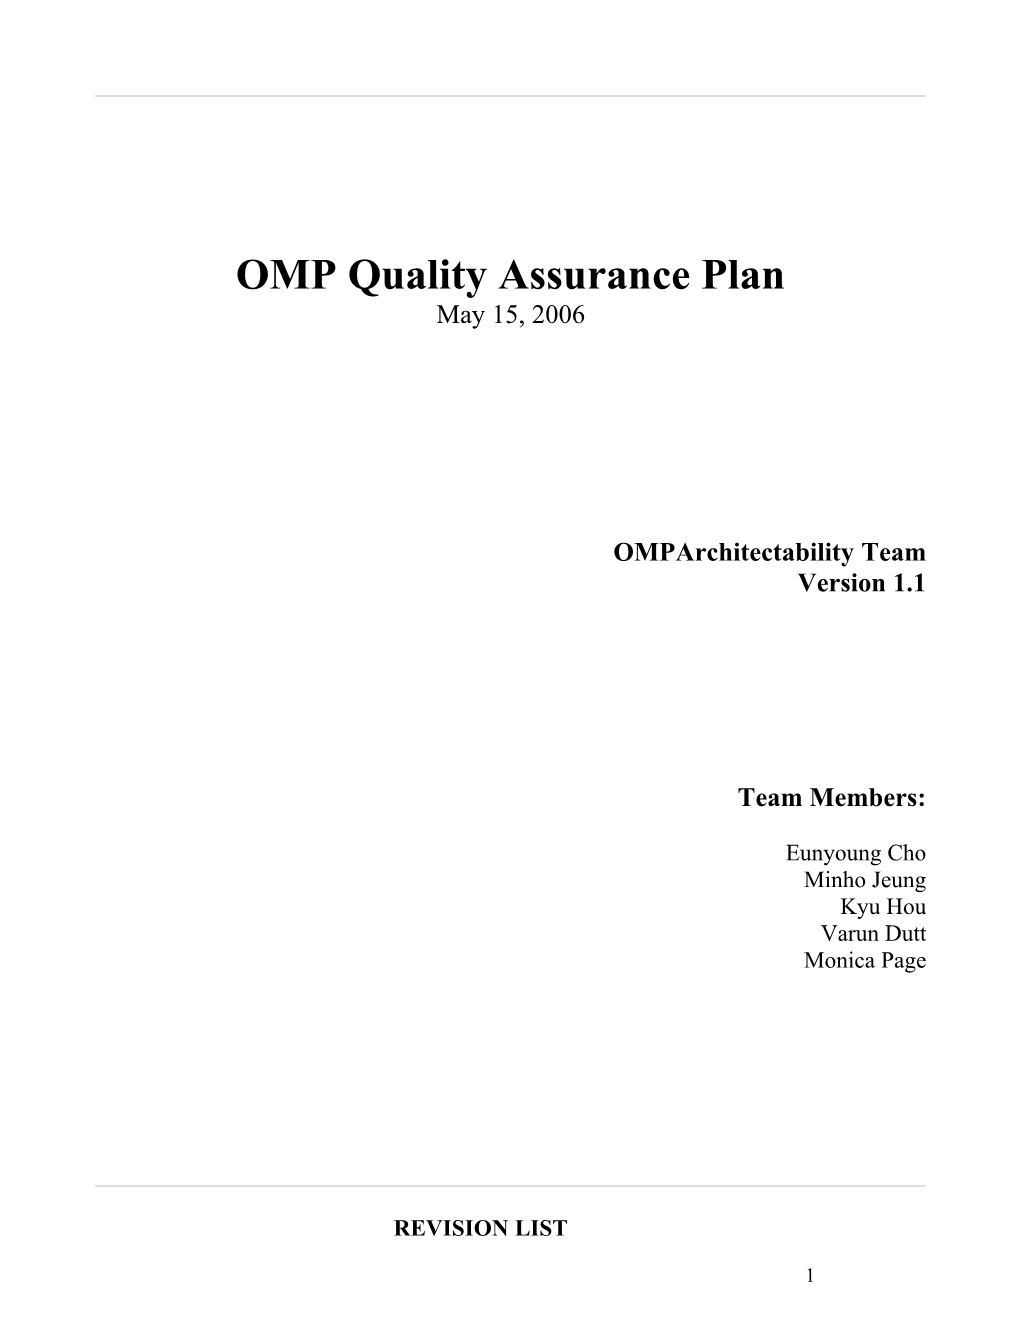 Software Quality Assurance Plan (SQAP) Template